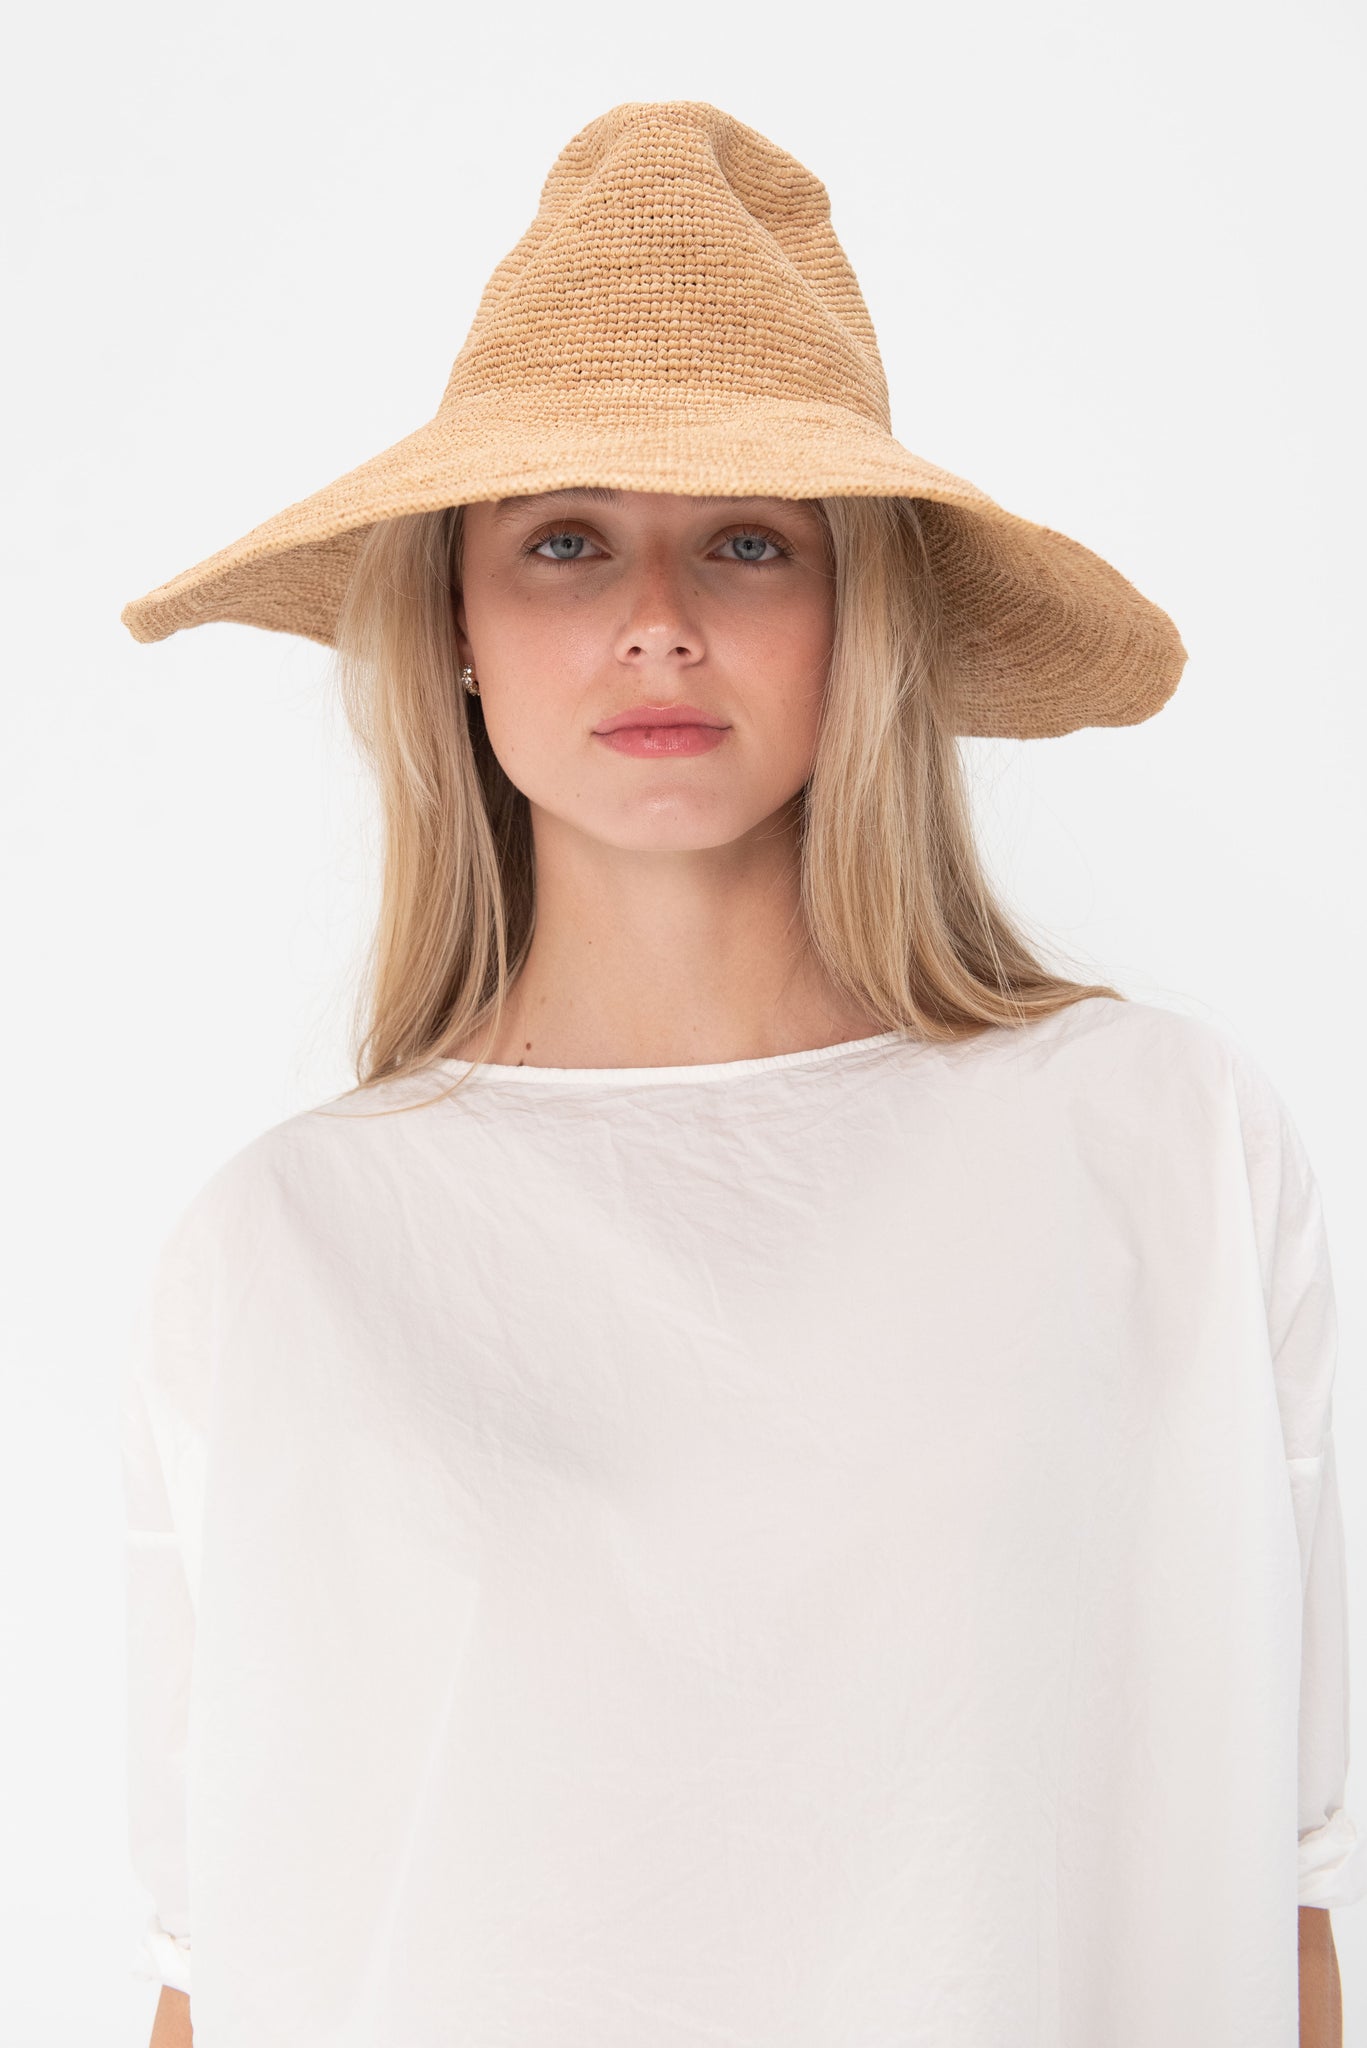 JANESSA LEONE - Waverly Hat, Sand